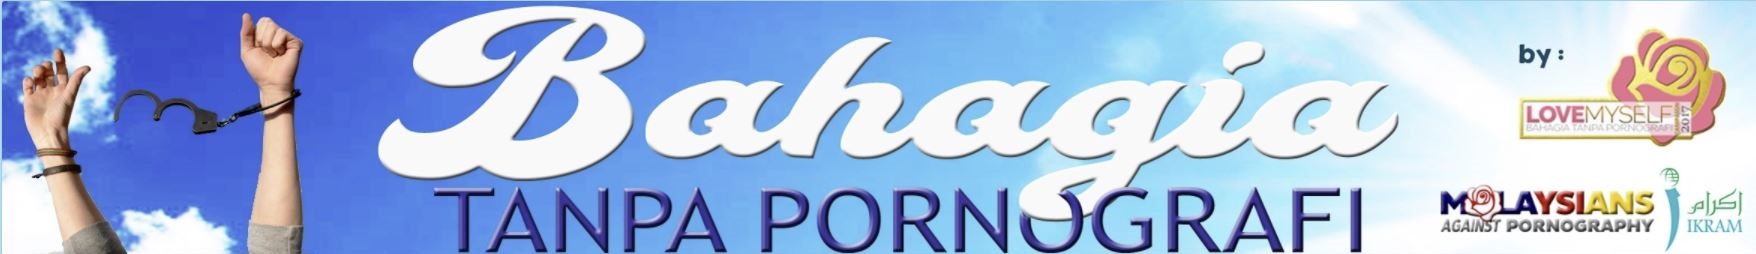 BahagiaTanpaPornografi-SEPT CAMPAIGN-MALAYSIANS AGAINST PORNOGRAPHY web banner